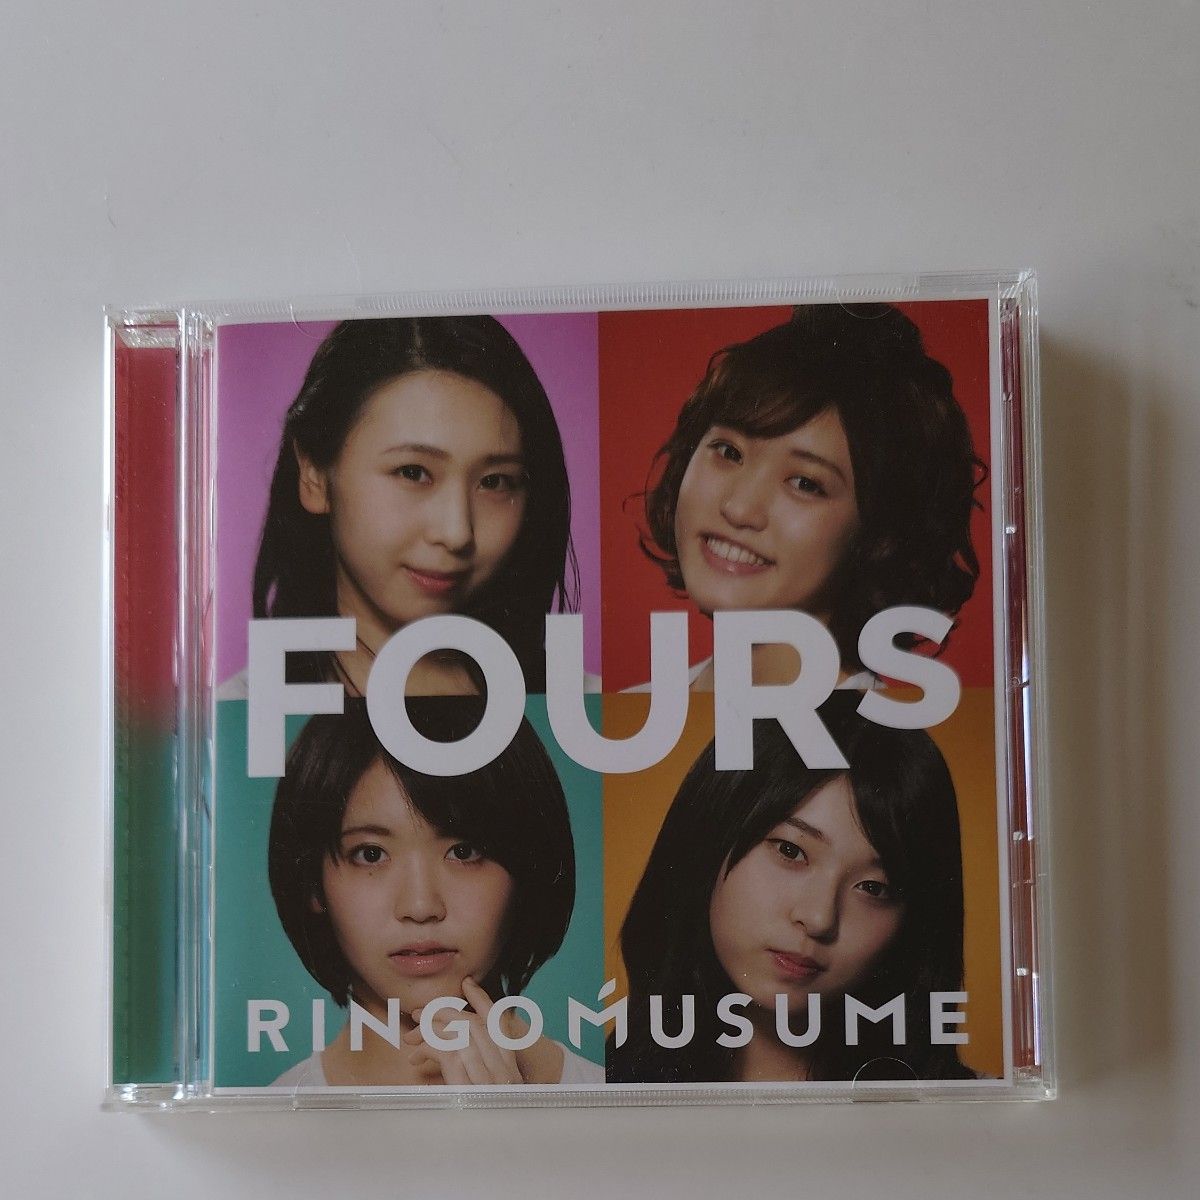 RINGO MUSUME CD「FOURs」